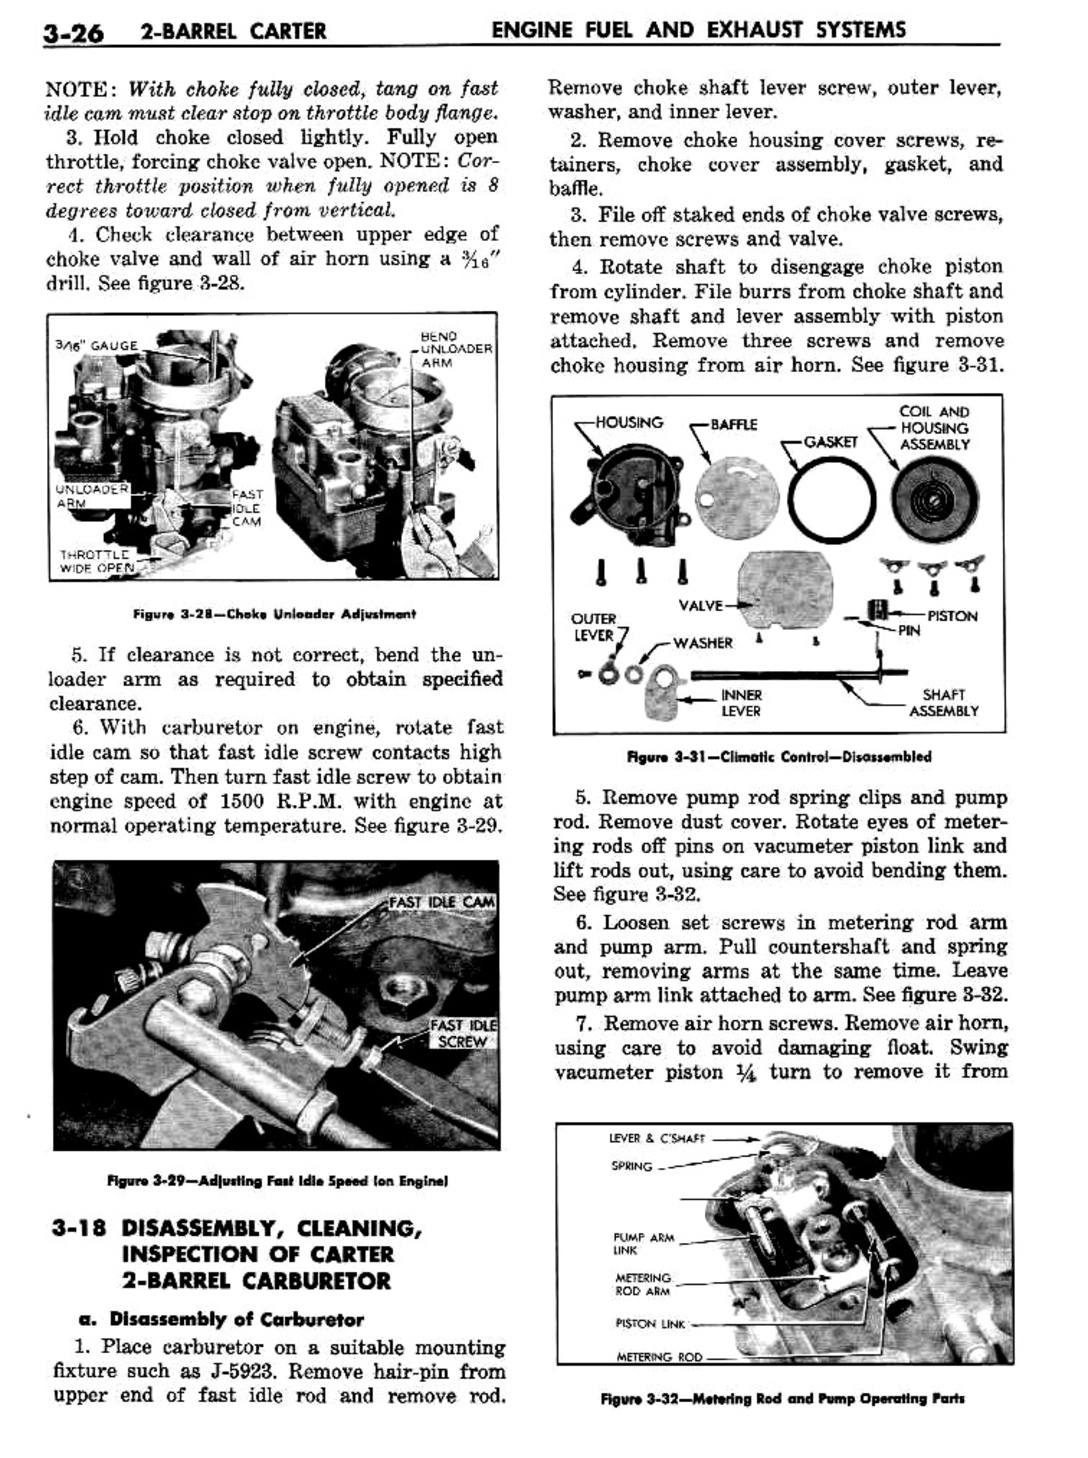 n_04 1960 Buick Shop Manual - Engine Fuel & Exhaust-026-026.jpg